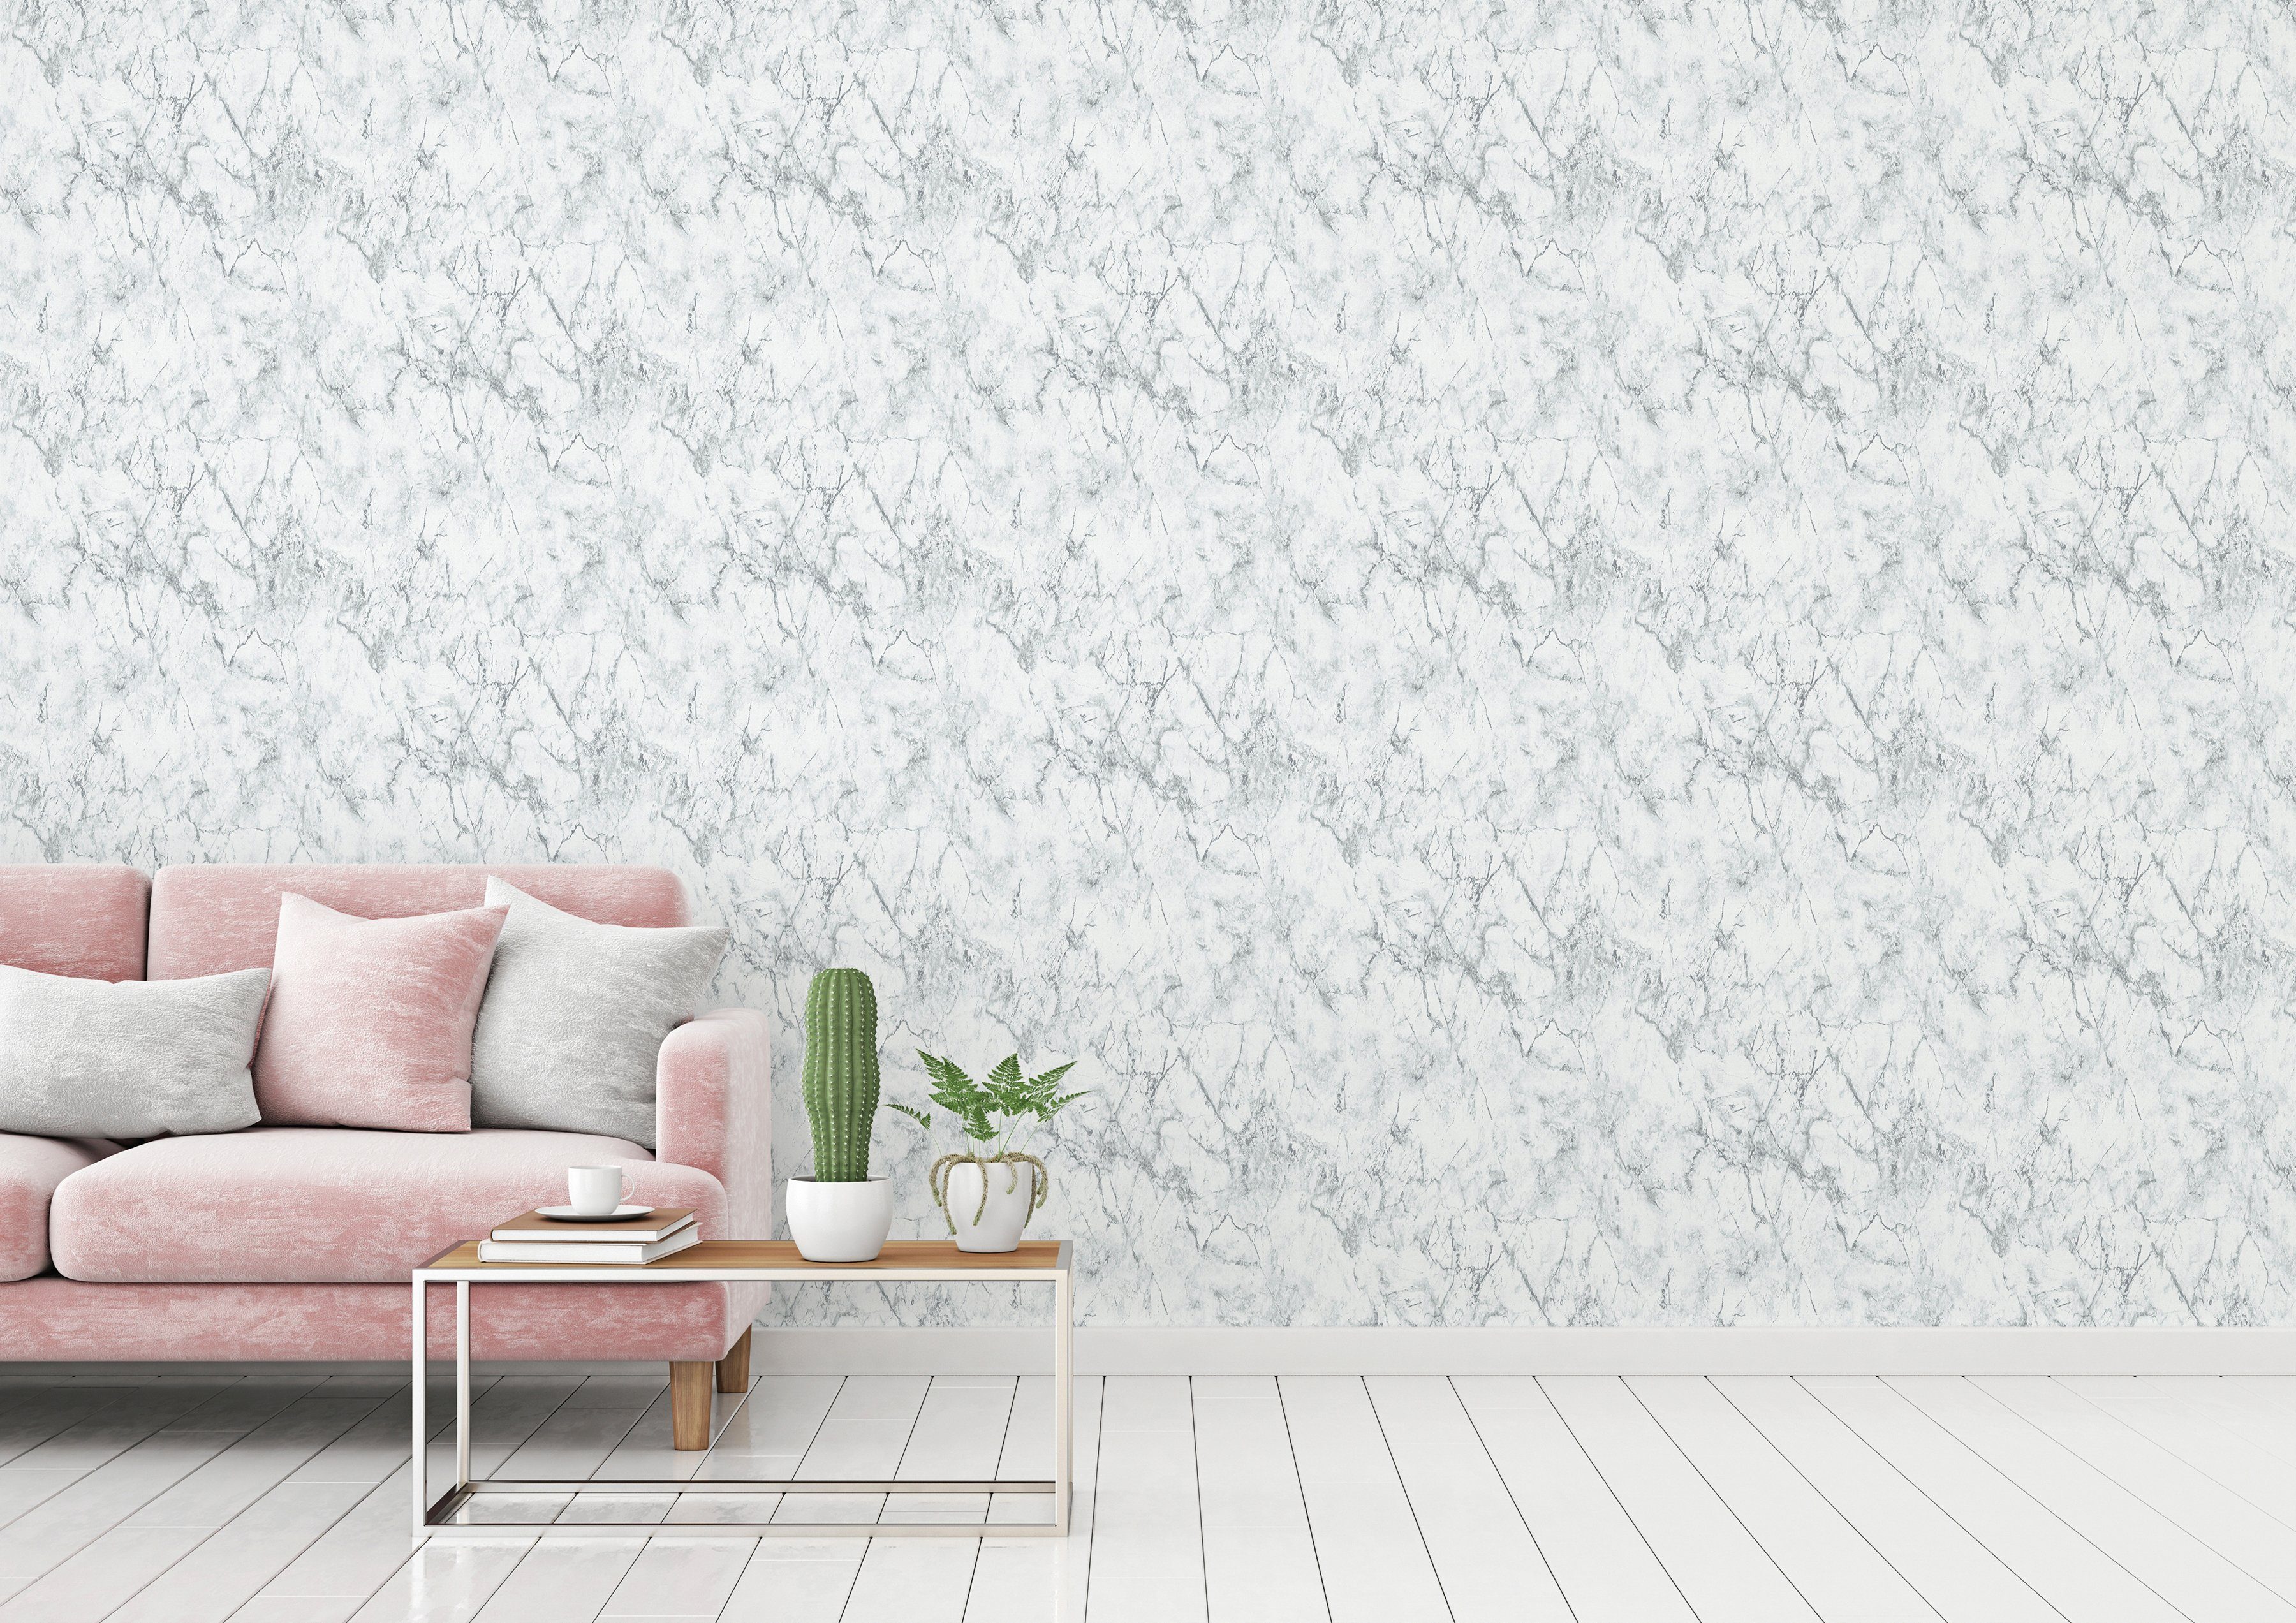 Tapete Materials, Vliestapete Marmor Moderne walls weiß/silbergrau living